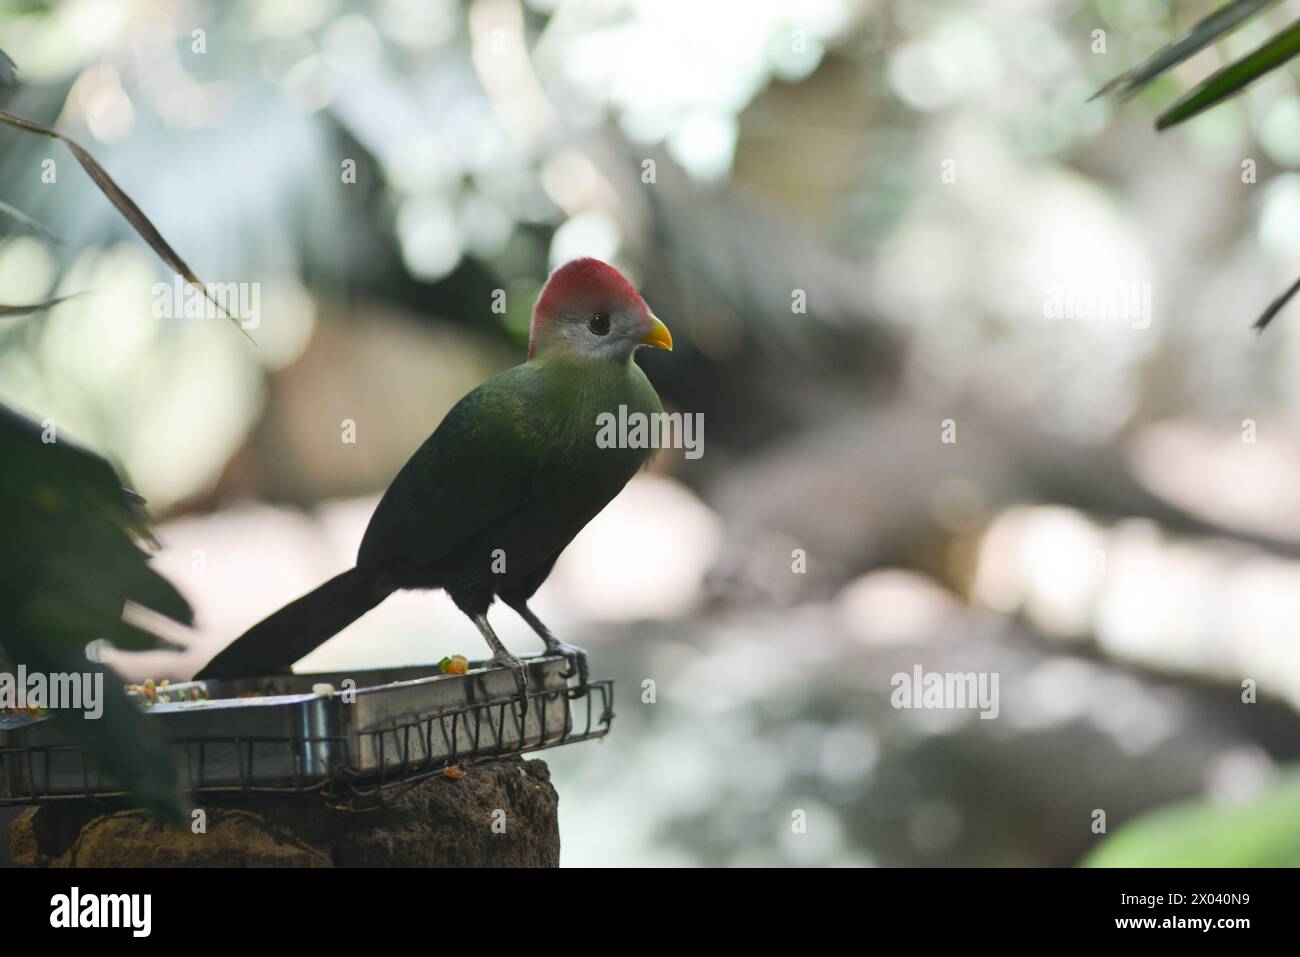 17th May 2015, Tropical birds at Barcelona Zoo Stock Photo